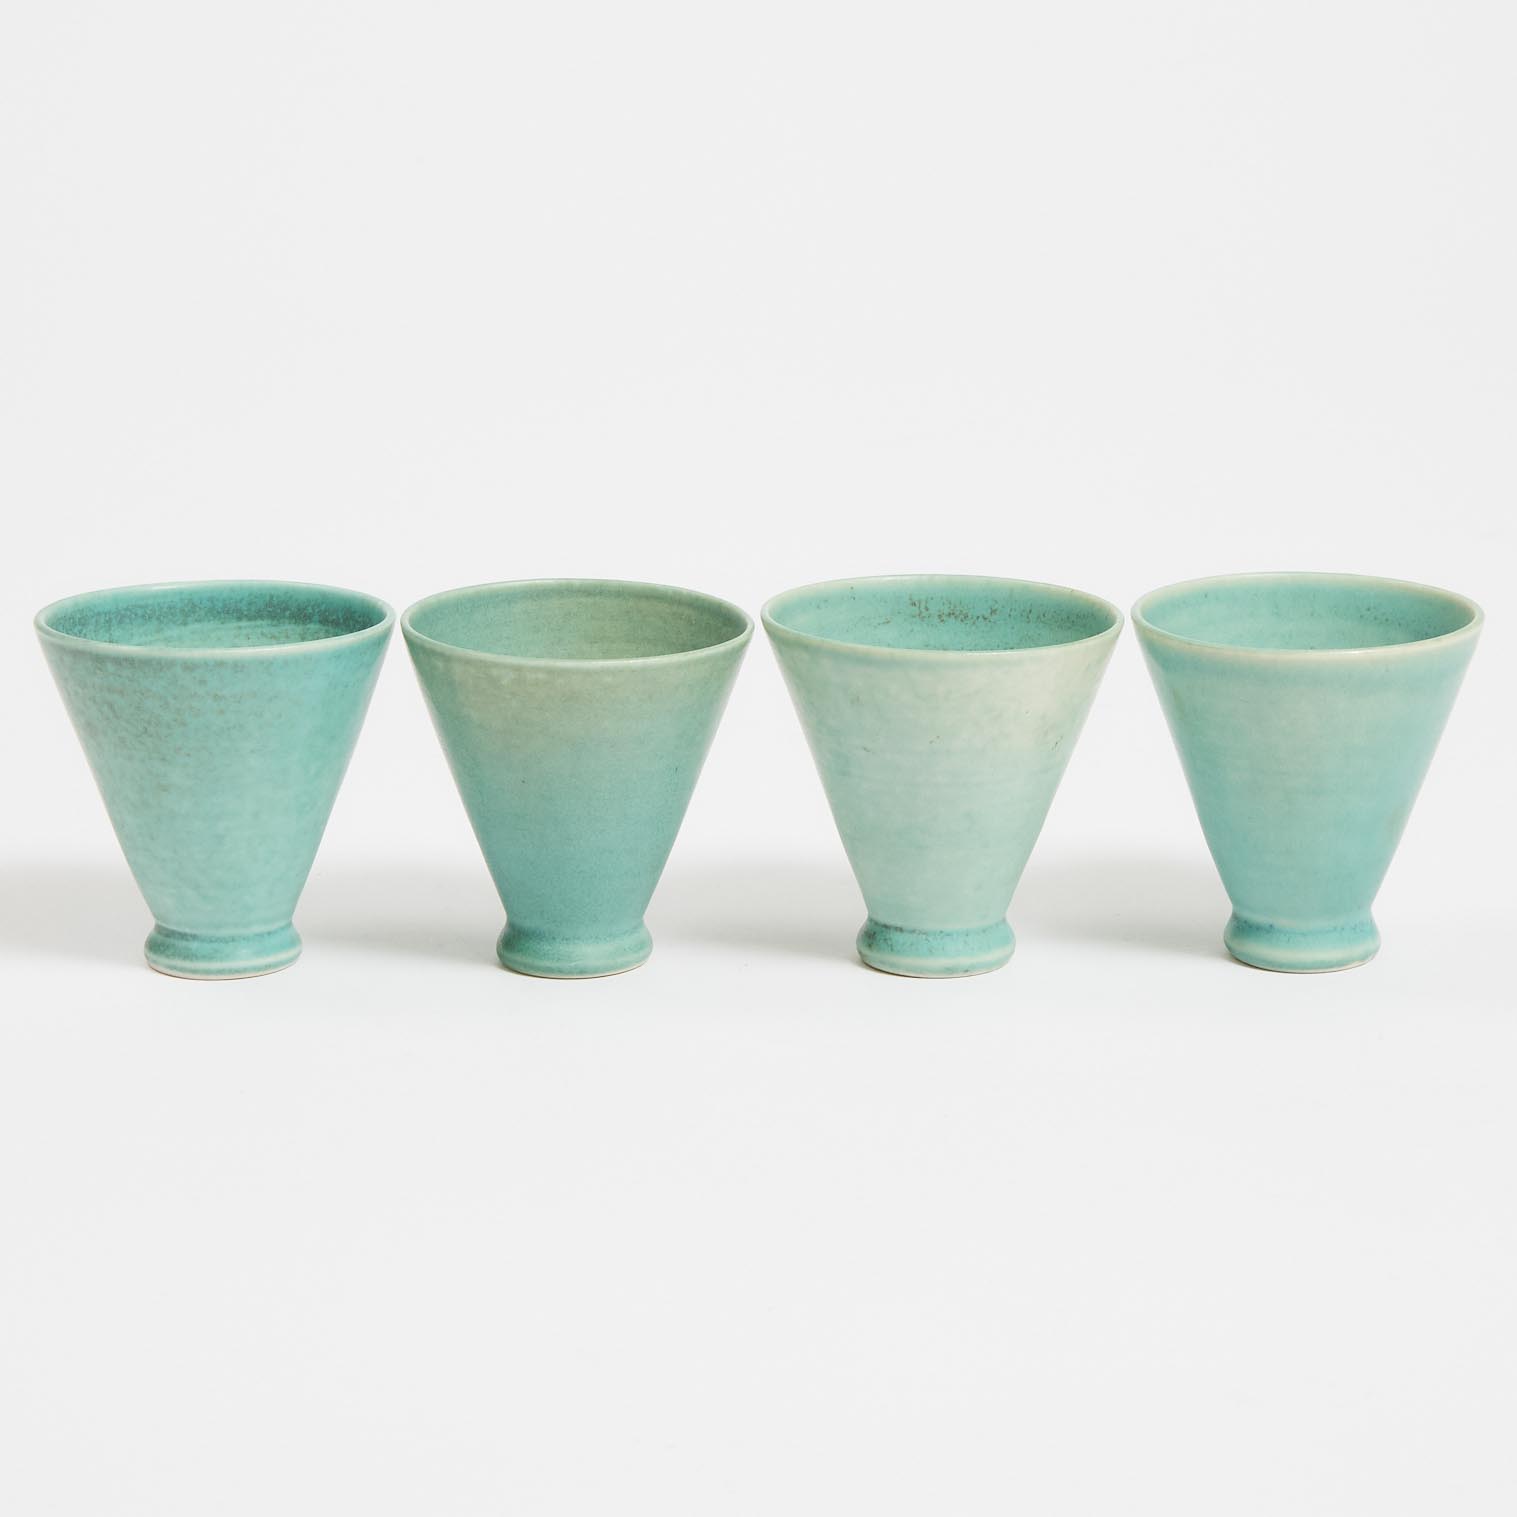 Four Deichmann Mottled Green Glazed Stoneware Small Cups, mid-20th century